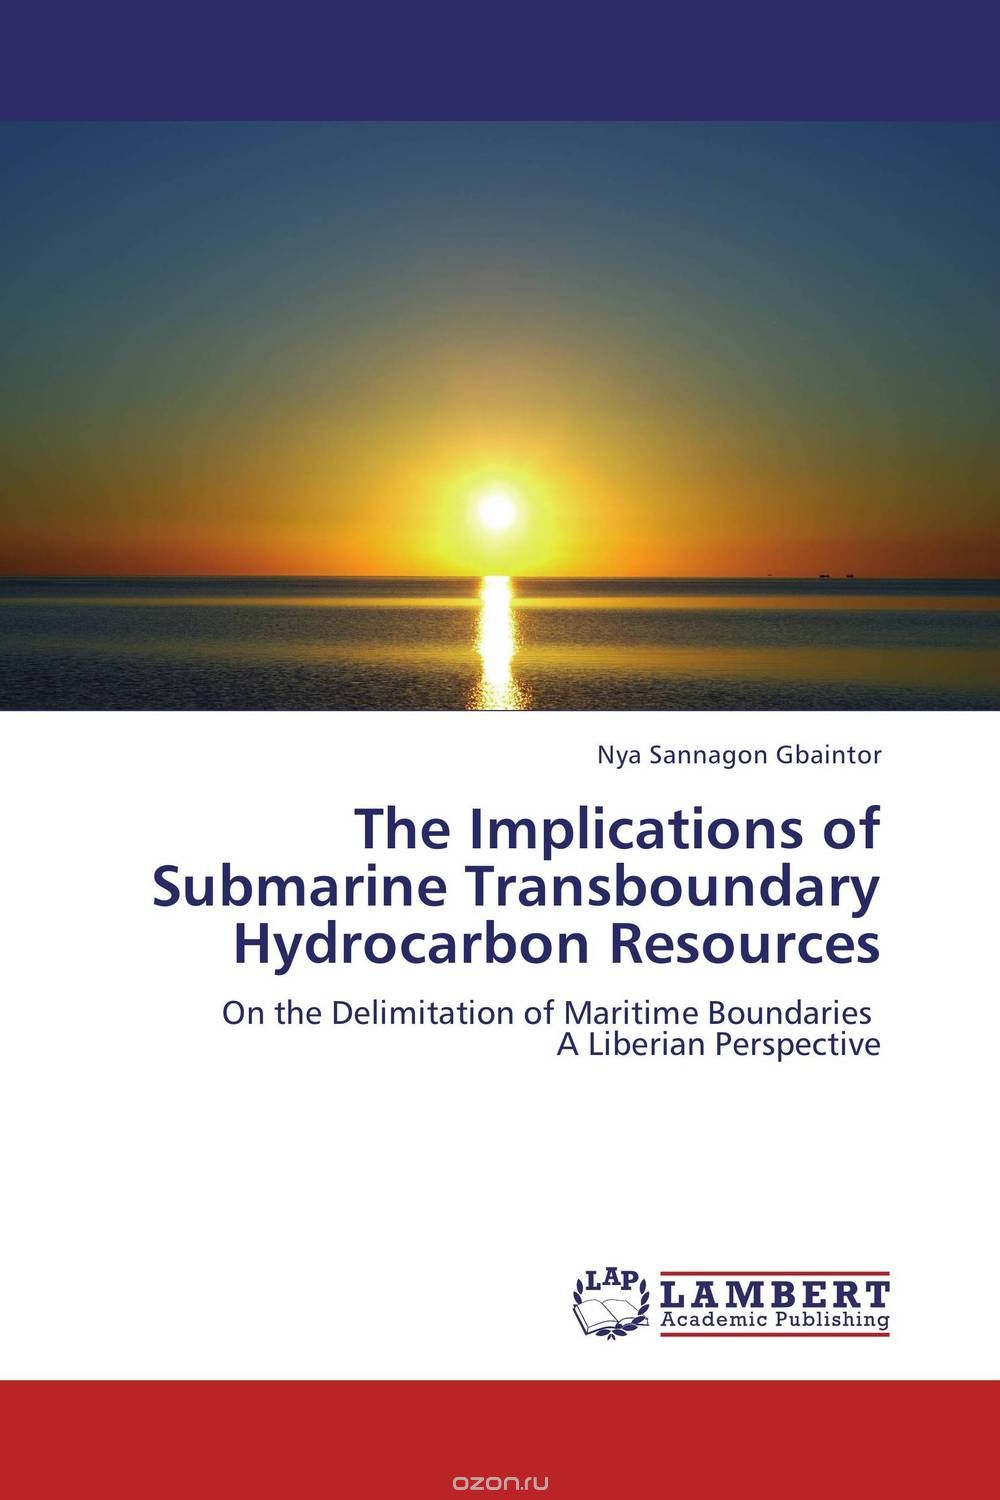 Скачать книгу "The Implications of Submarine Transboundary Hydrocarbon Resources"